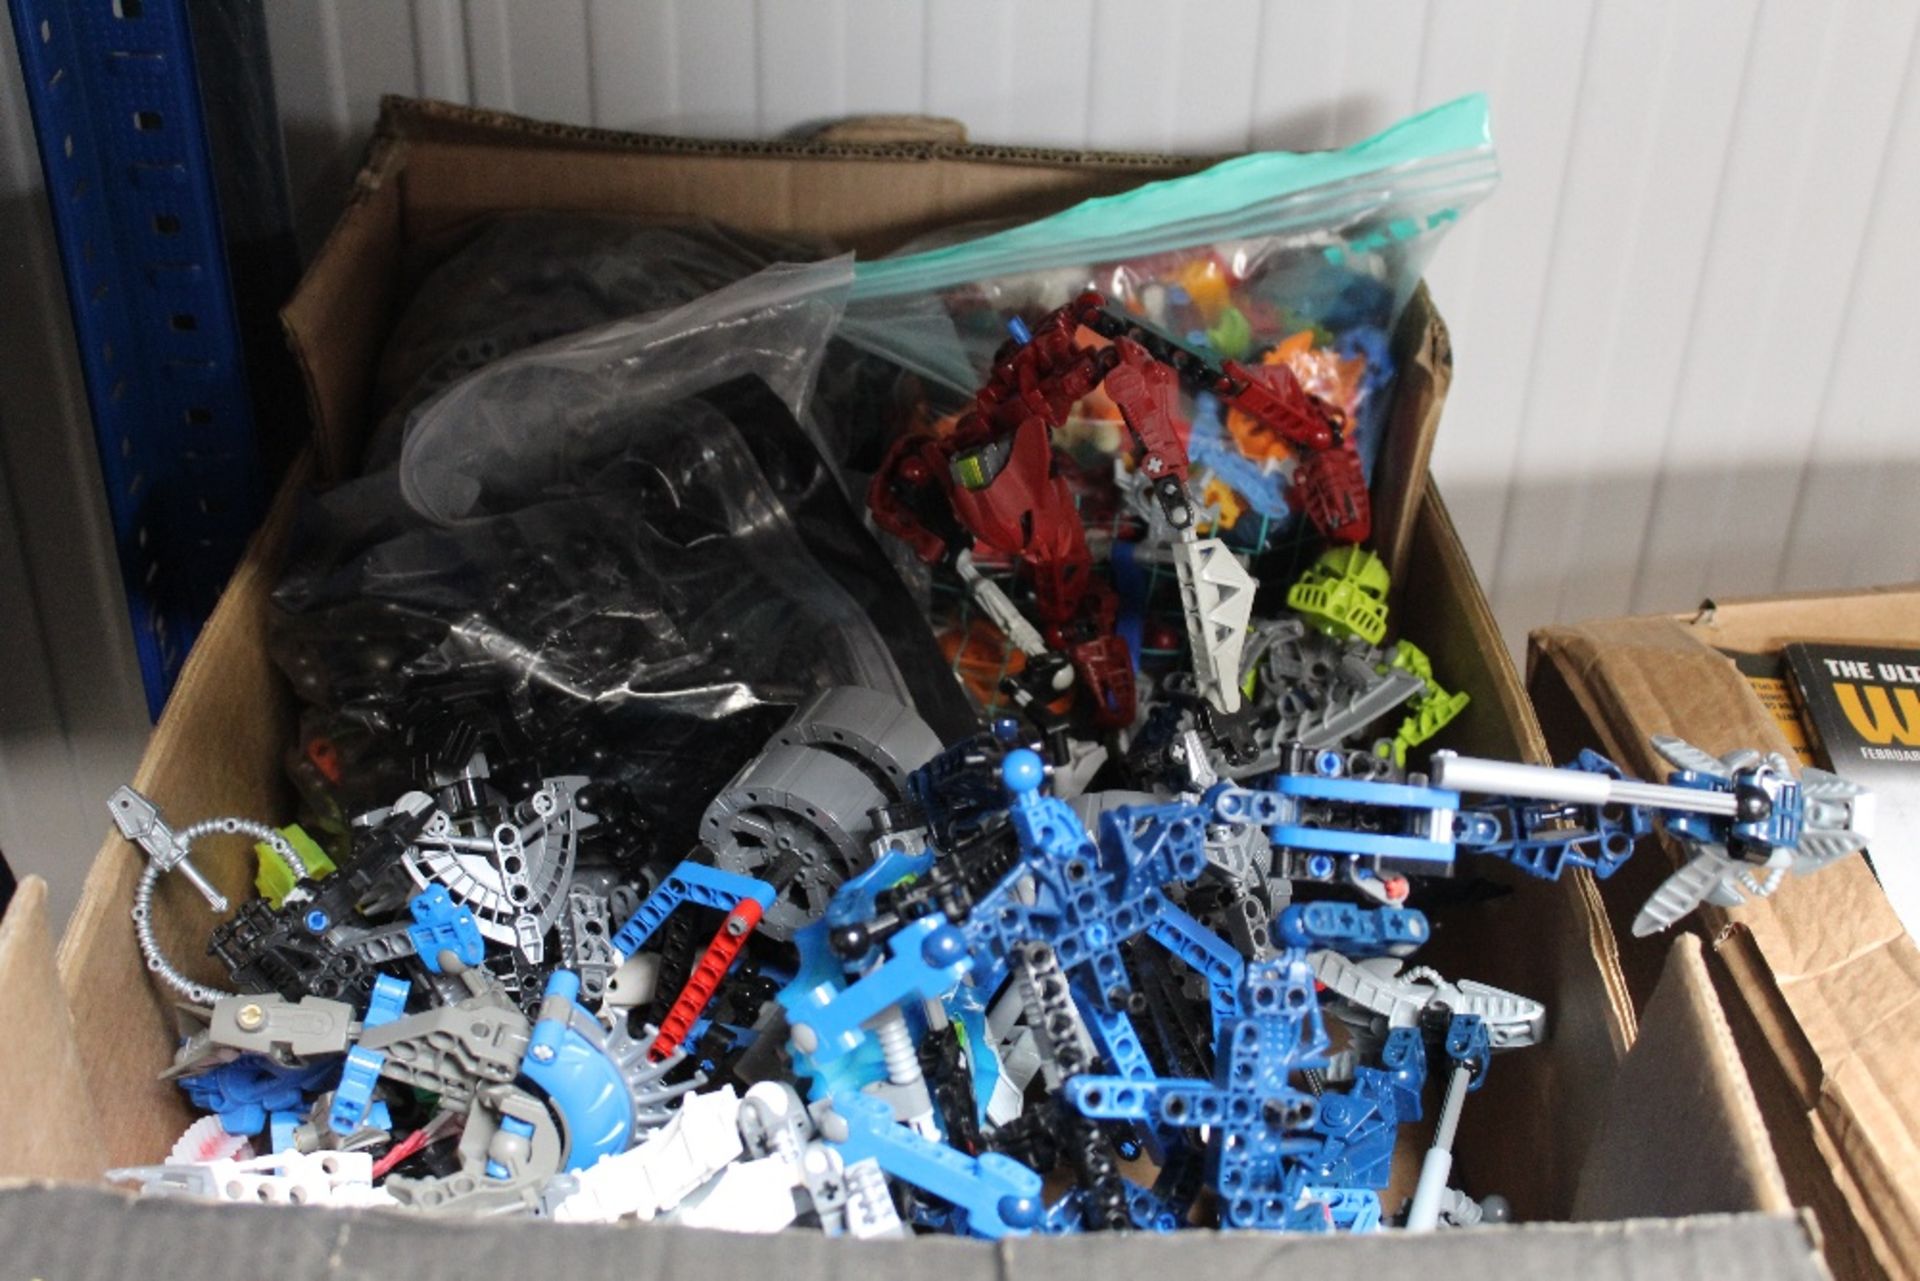 A box of Bionicle figures etc.